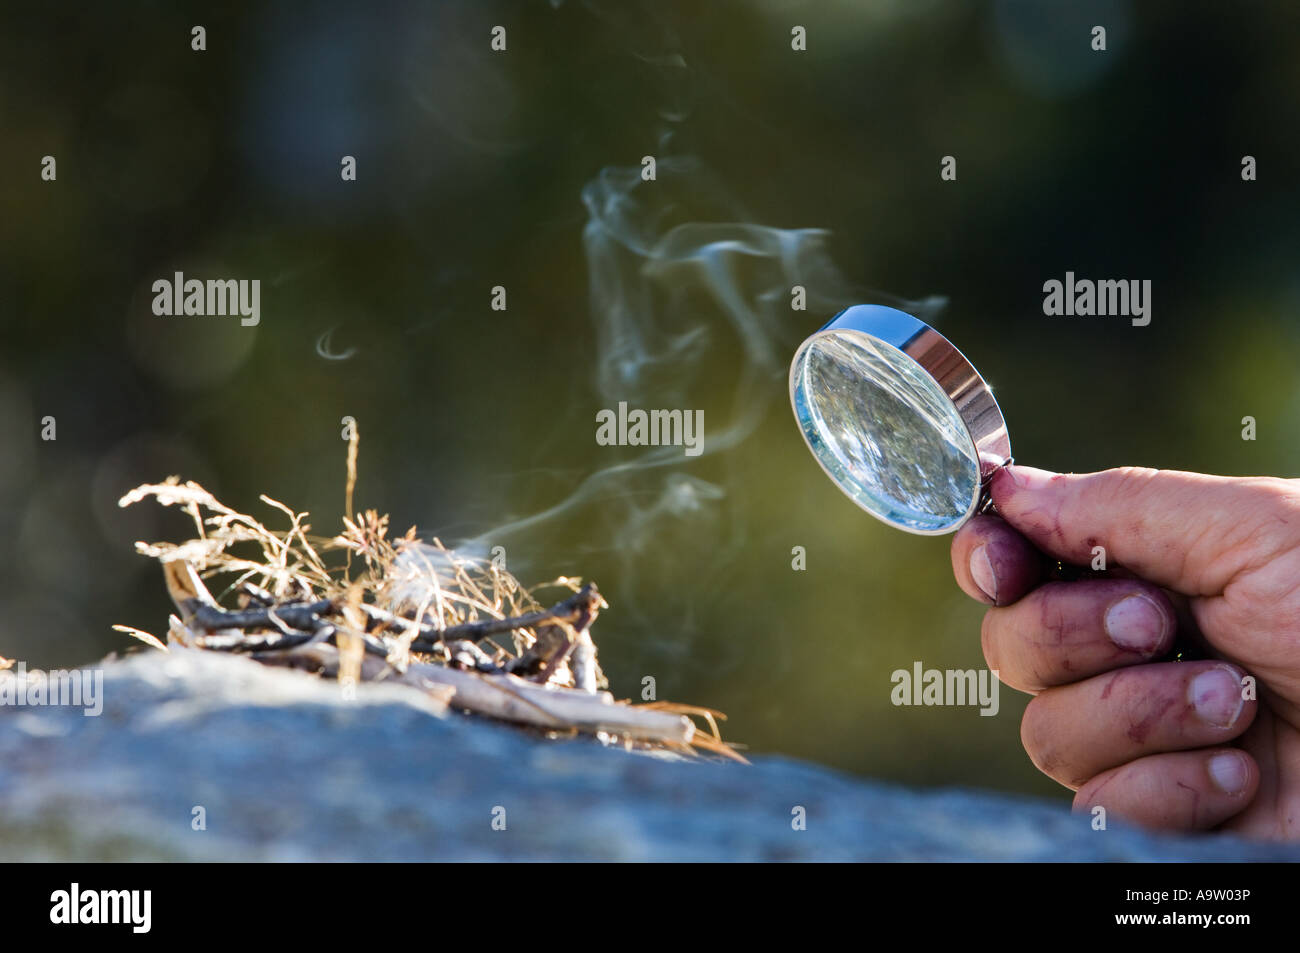 Allumer un feu avec une loupe Photo Stock - Alamy